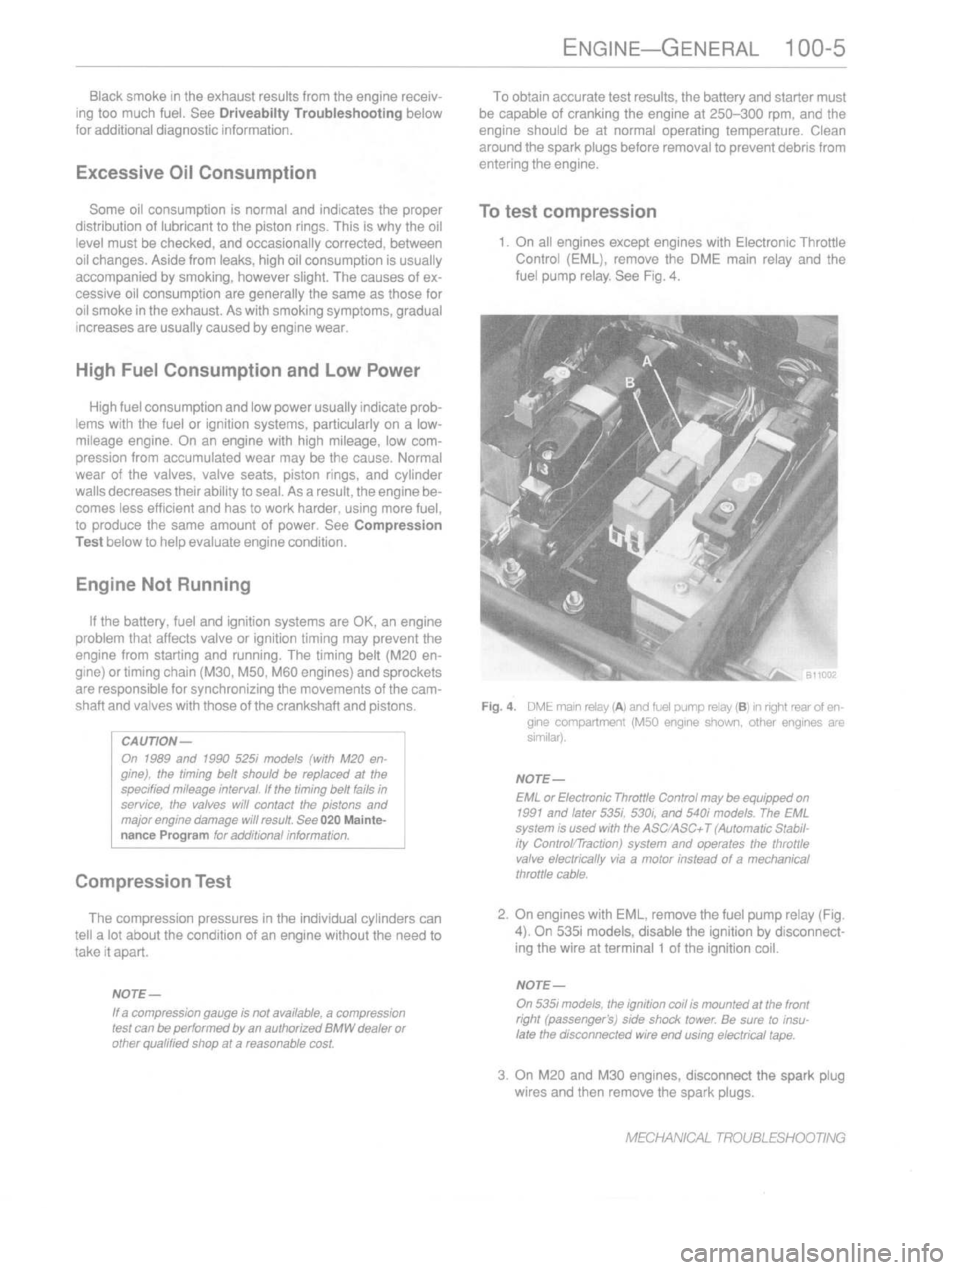 BMW 535i 1989 E34 Service Manual 